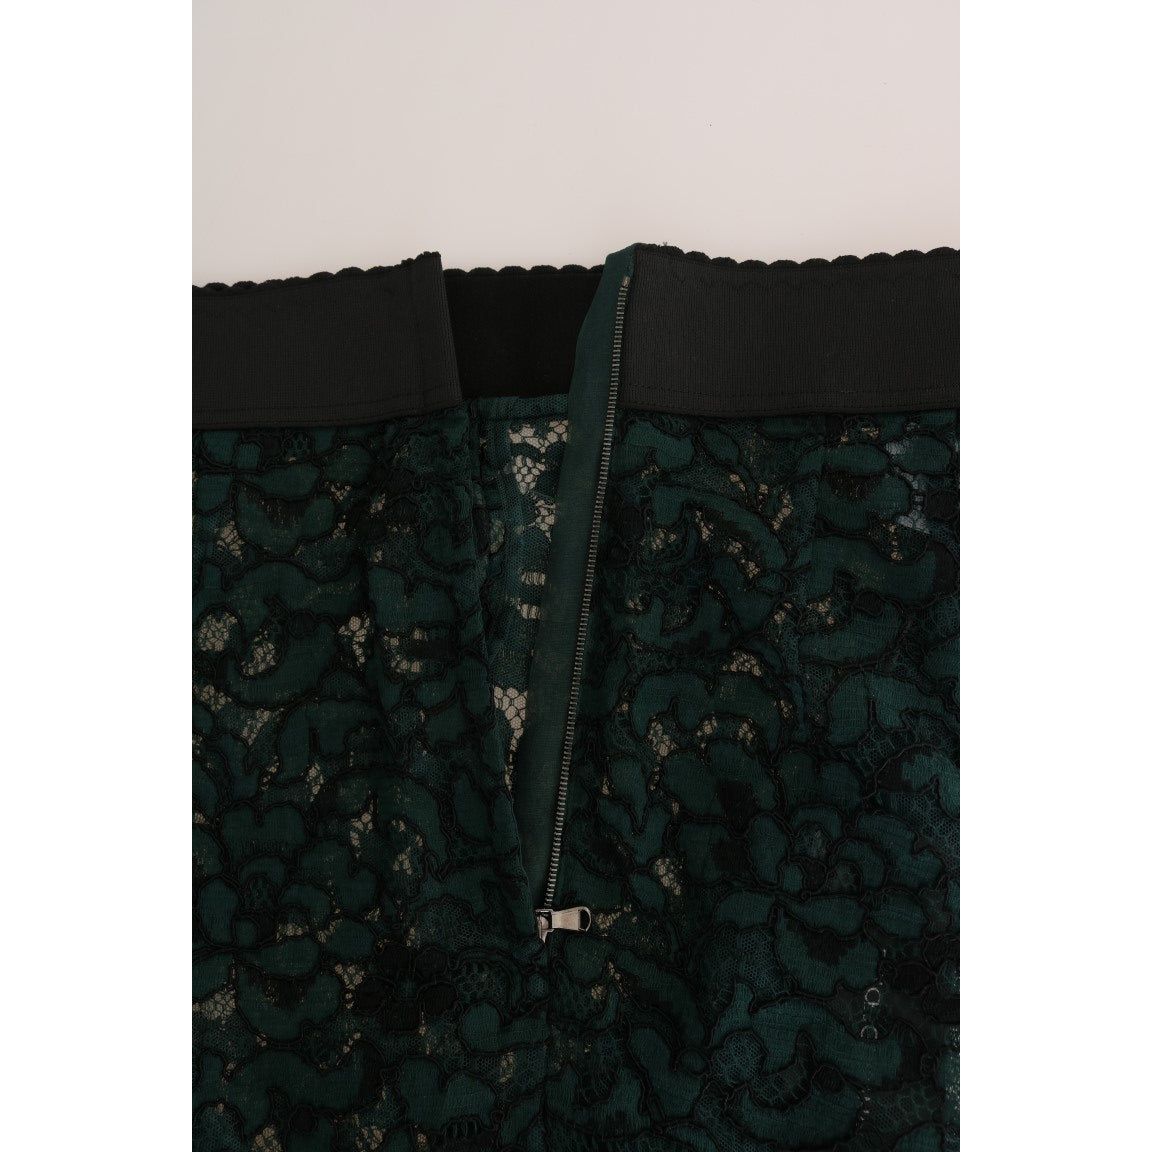 Dolce & Gabbana High Waist Floral Lace Slim Trousers green-floral-lace-leggings-pants 479205-green-floral-lace-leggings-pants-3.jpg